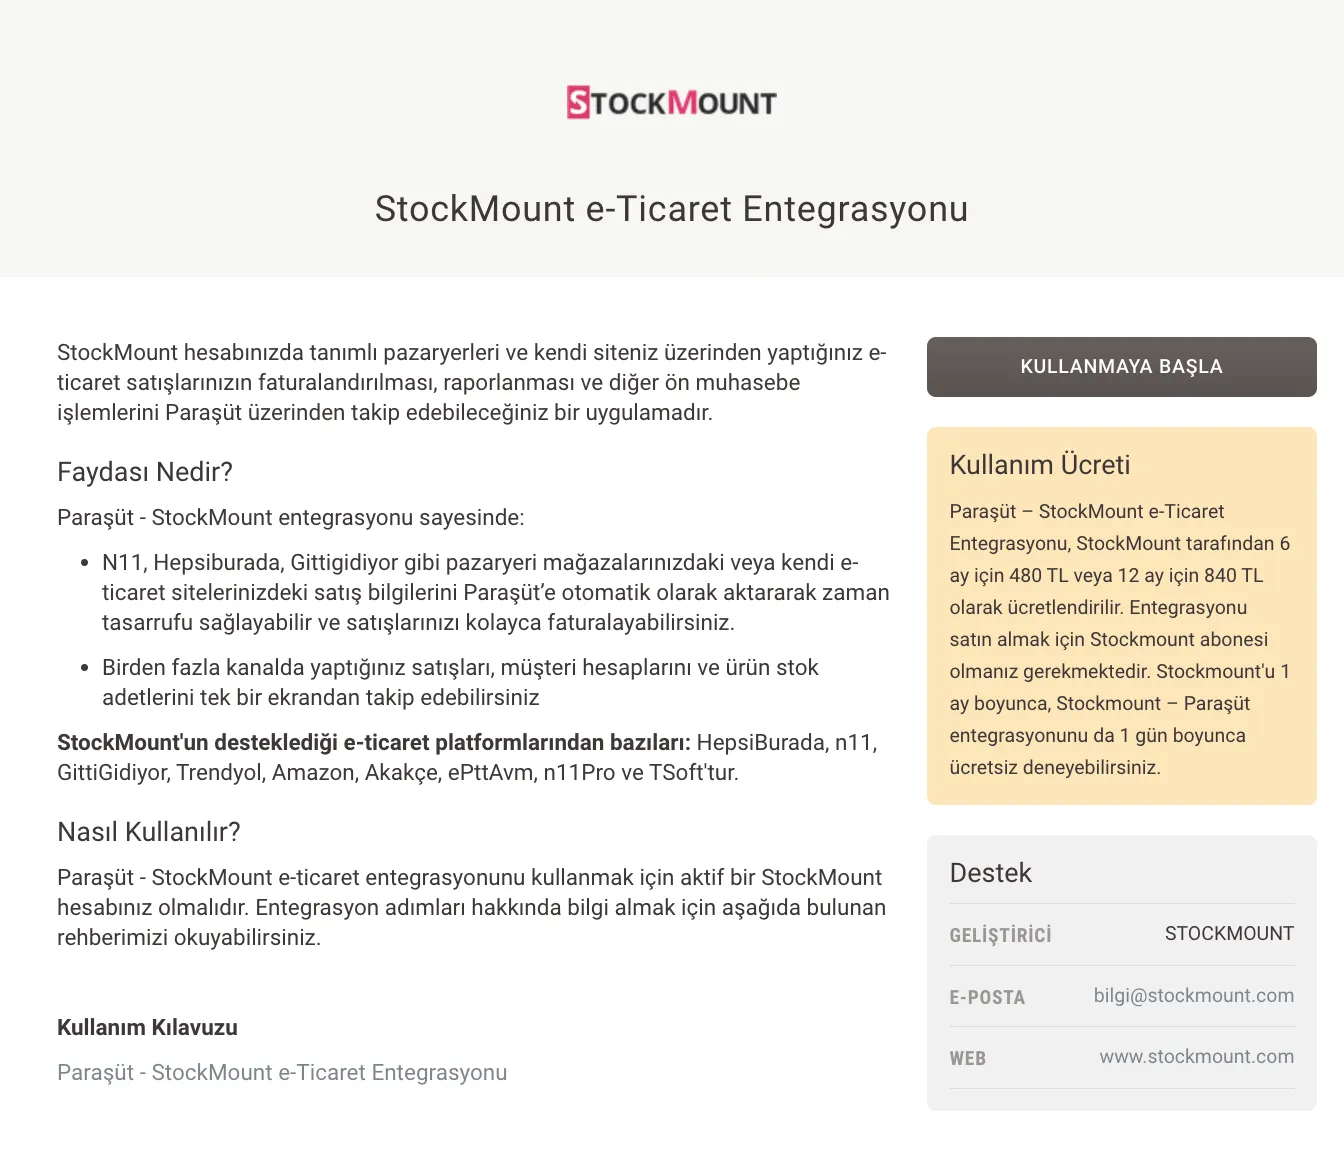 Paraşüt Stockmount e-Ticaret Entegrasyonu